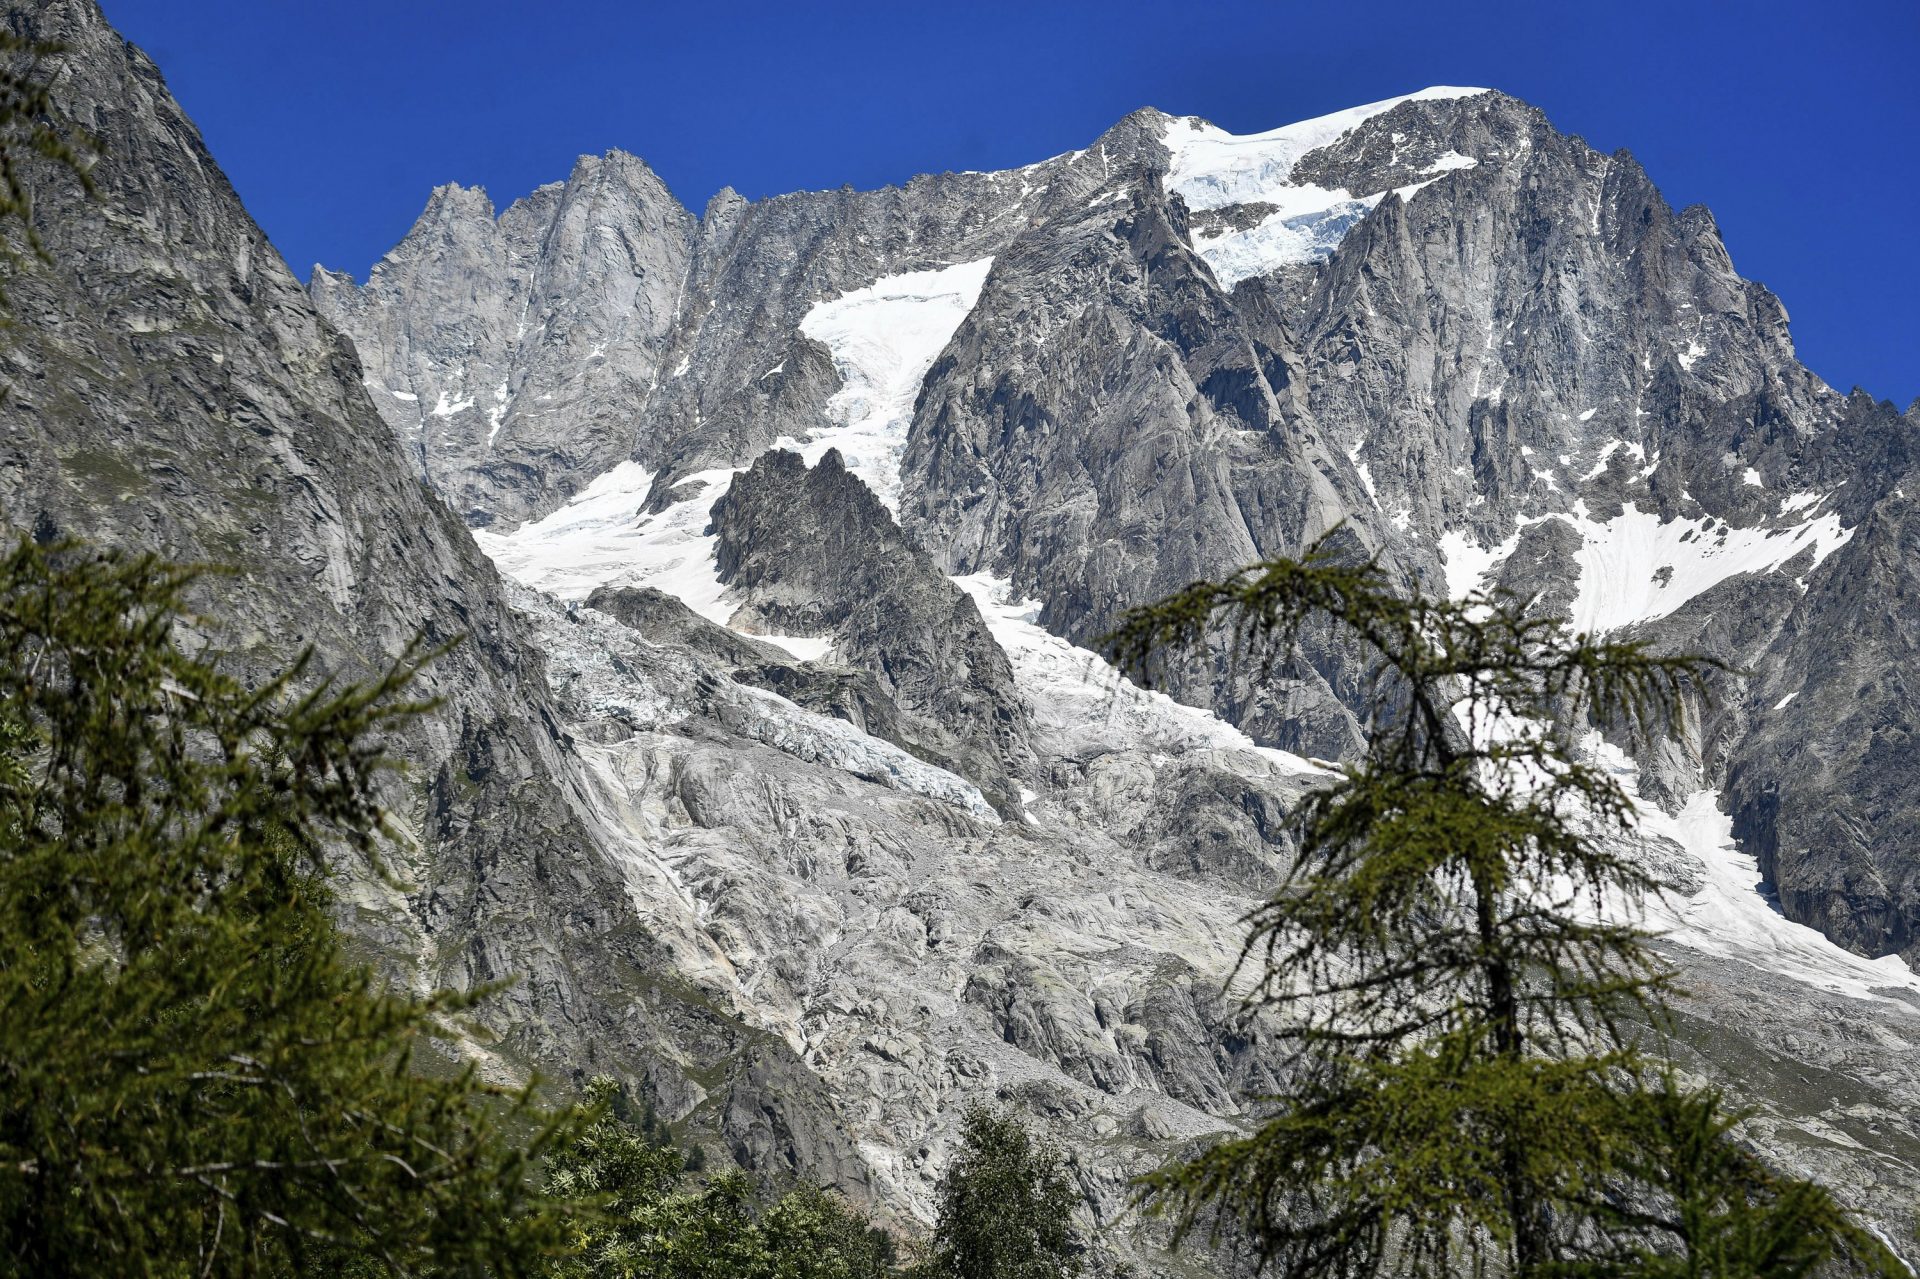 Alpine glacier in Italy threatens valley, forces evacuations